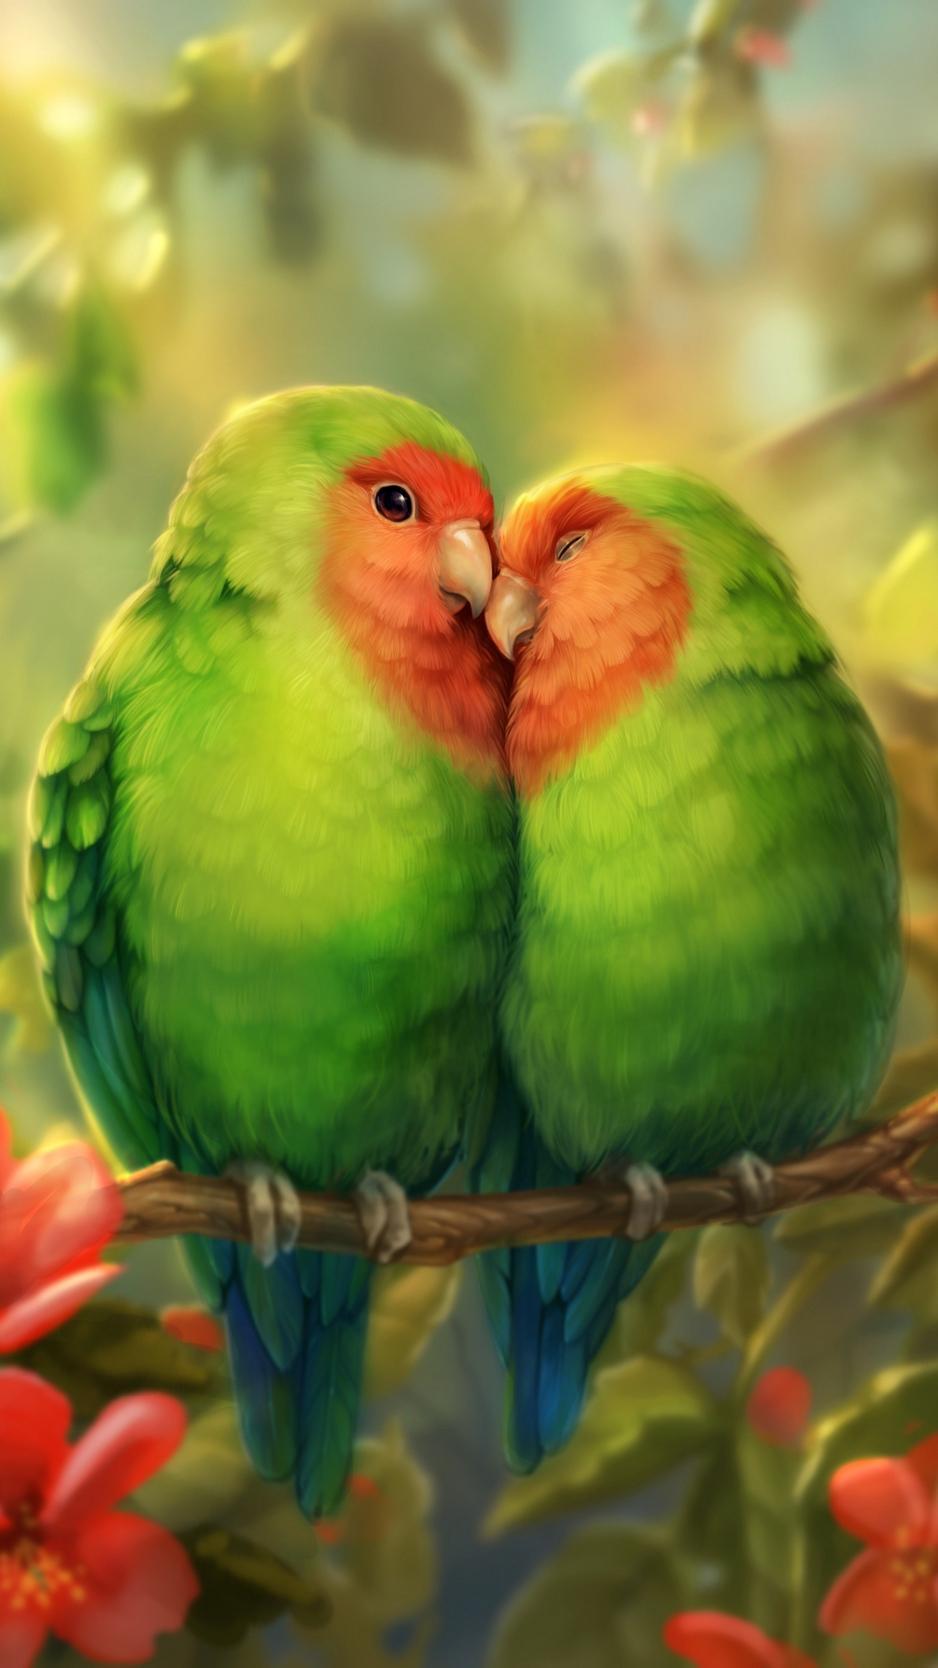 Cute Parrots Wallpapers - Top Free Cute Parrots Backgrounds ...